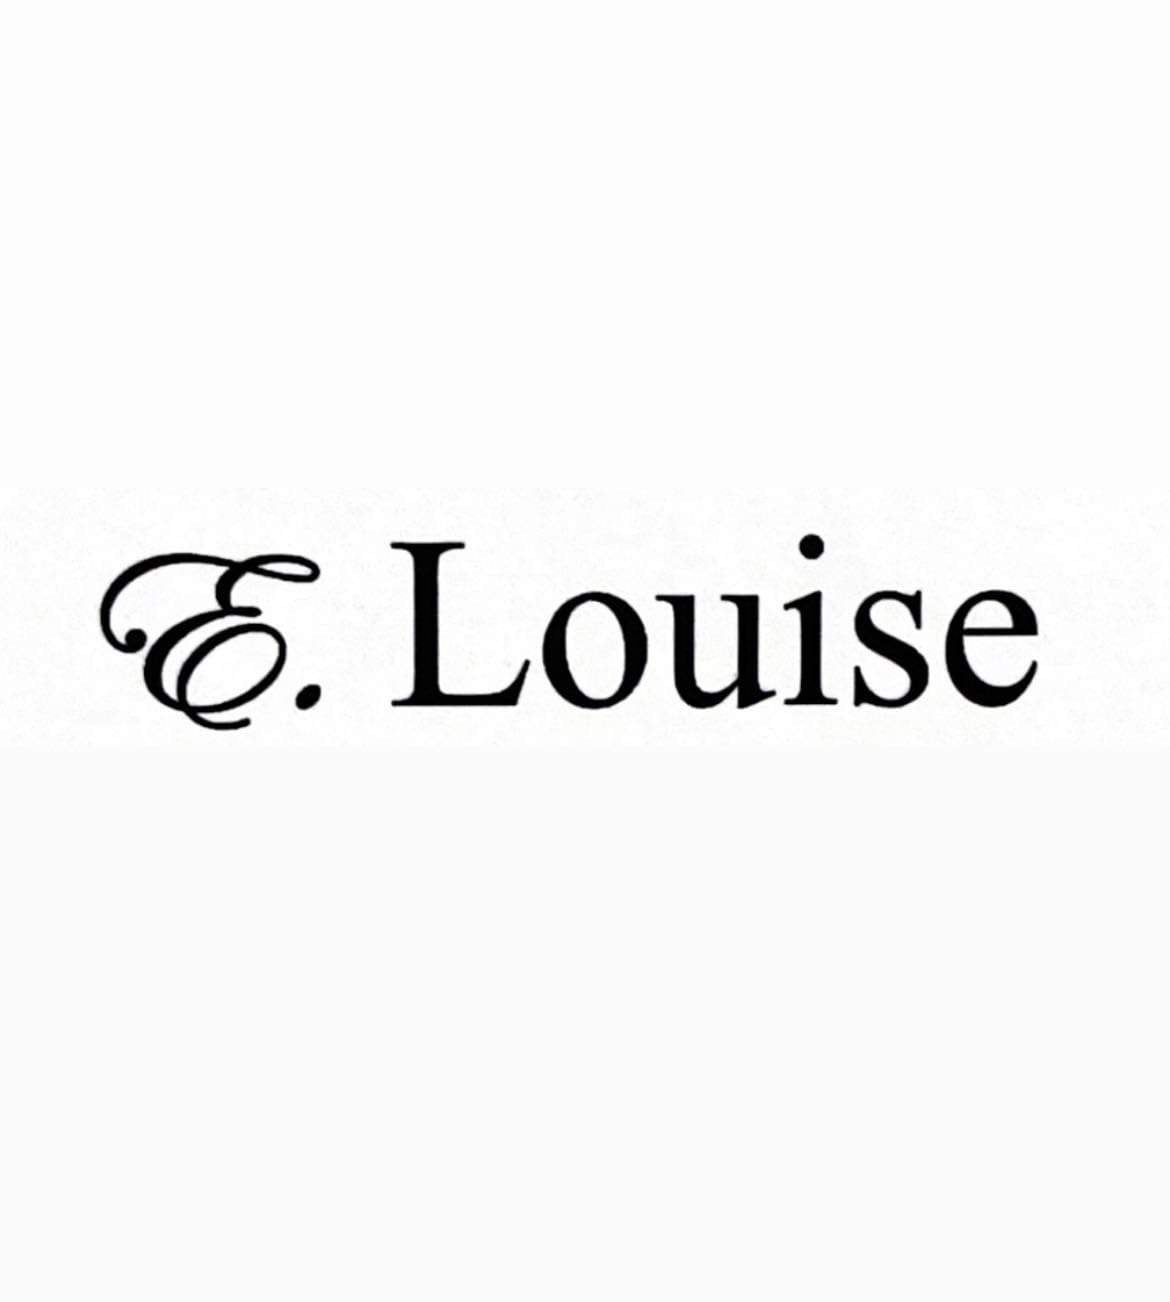 E. Louise Brand & Store